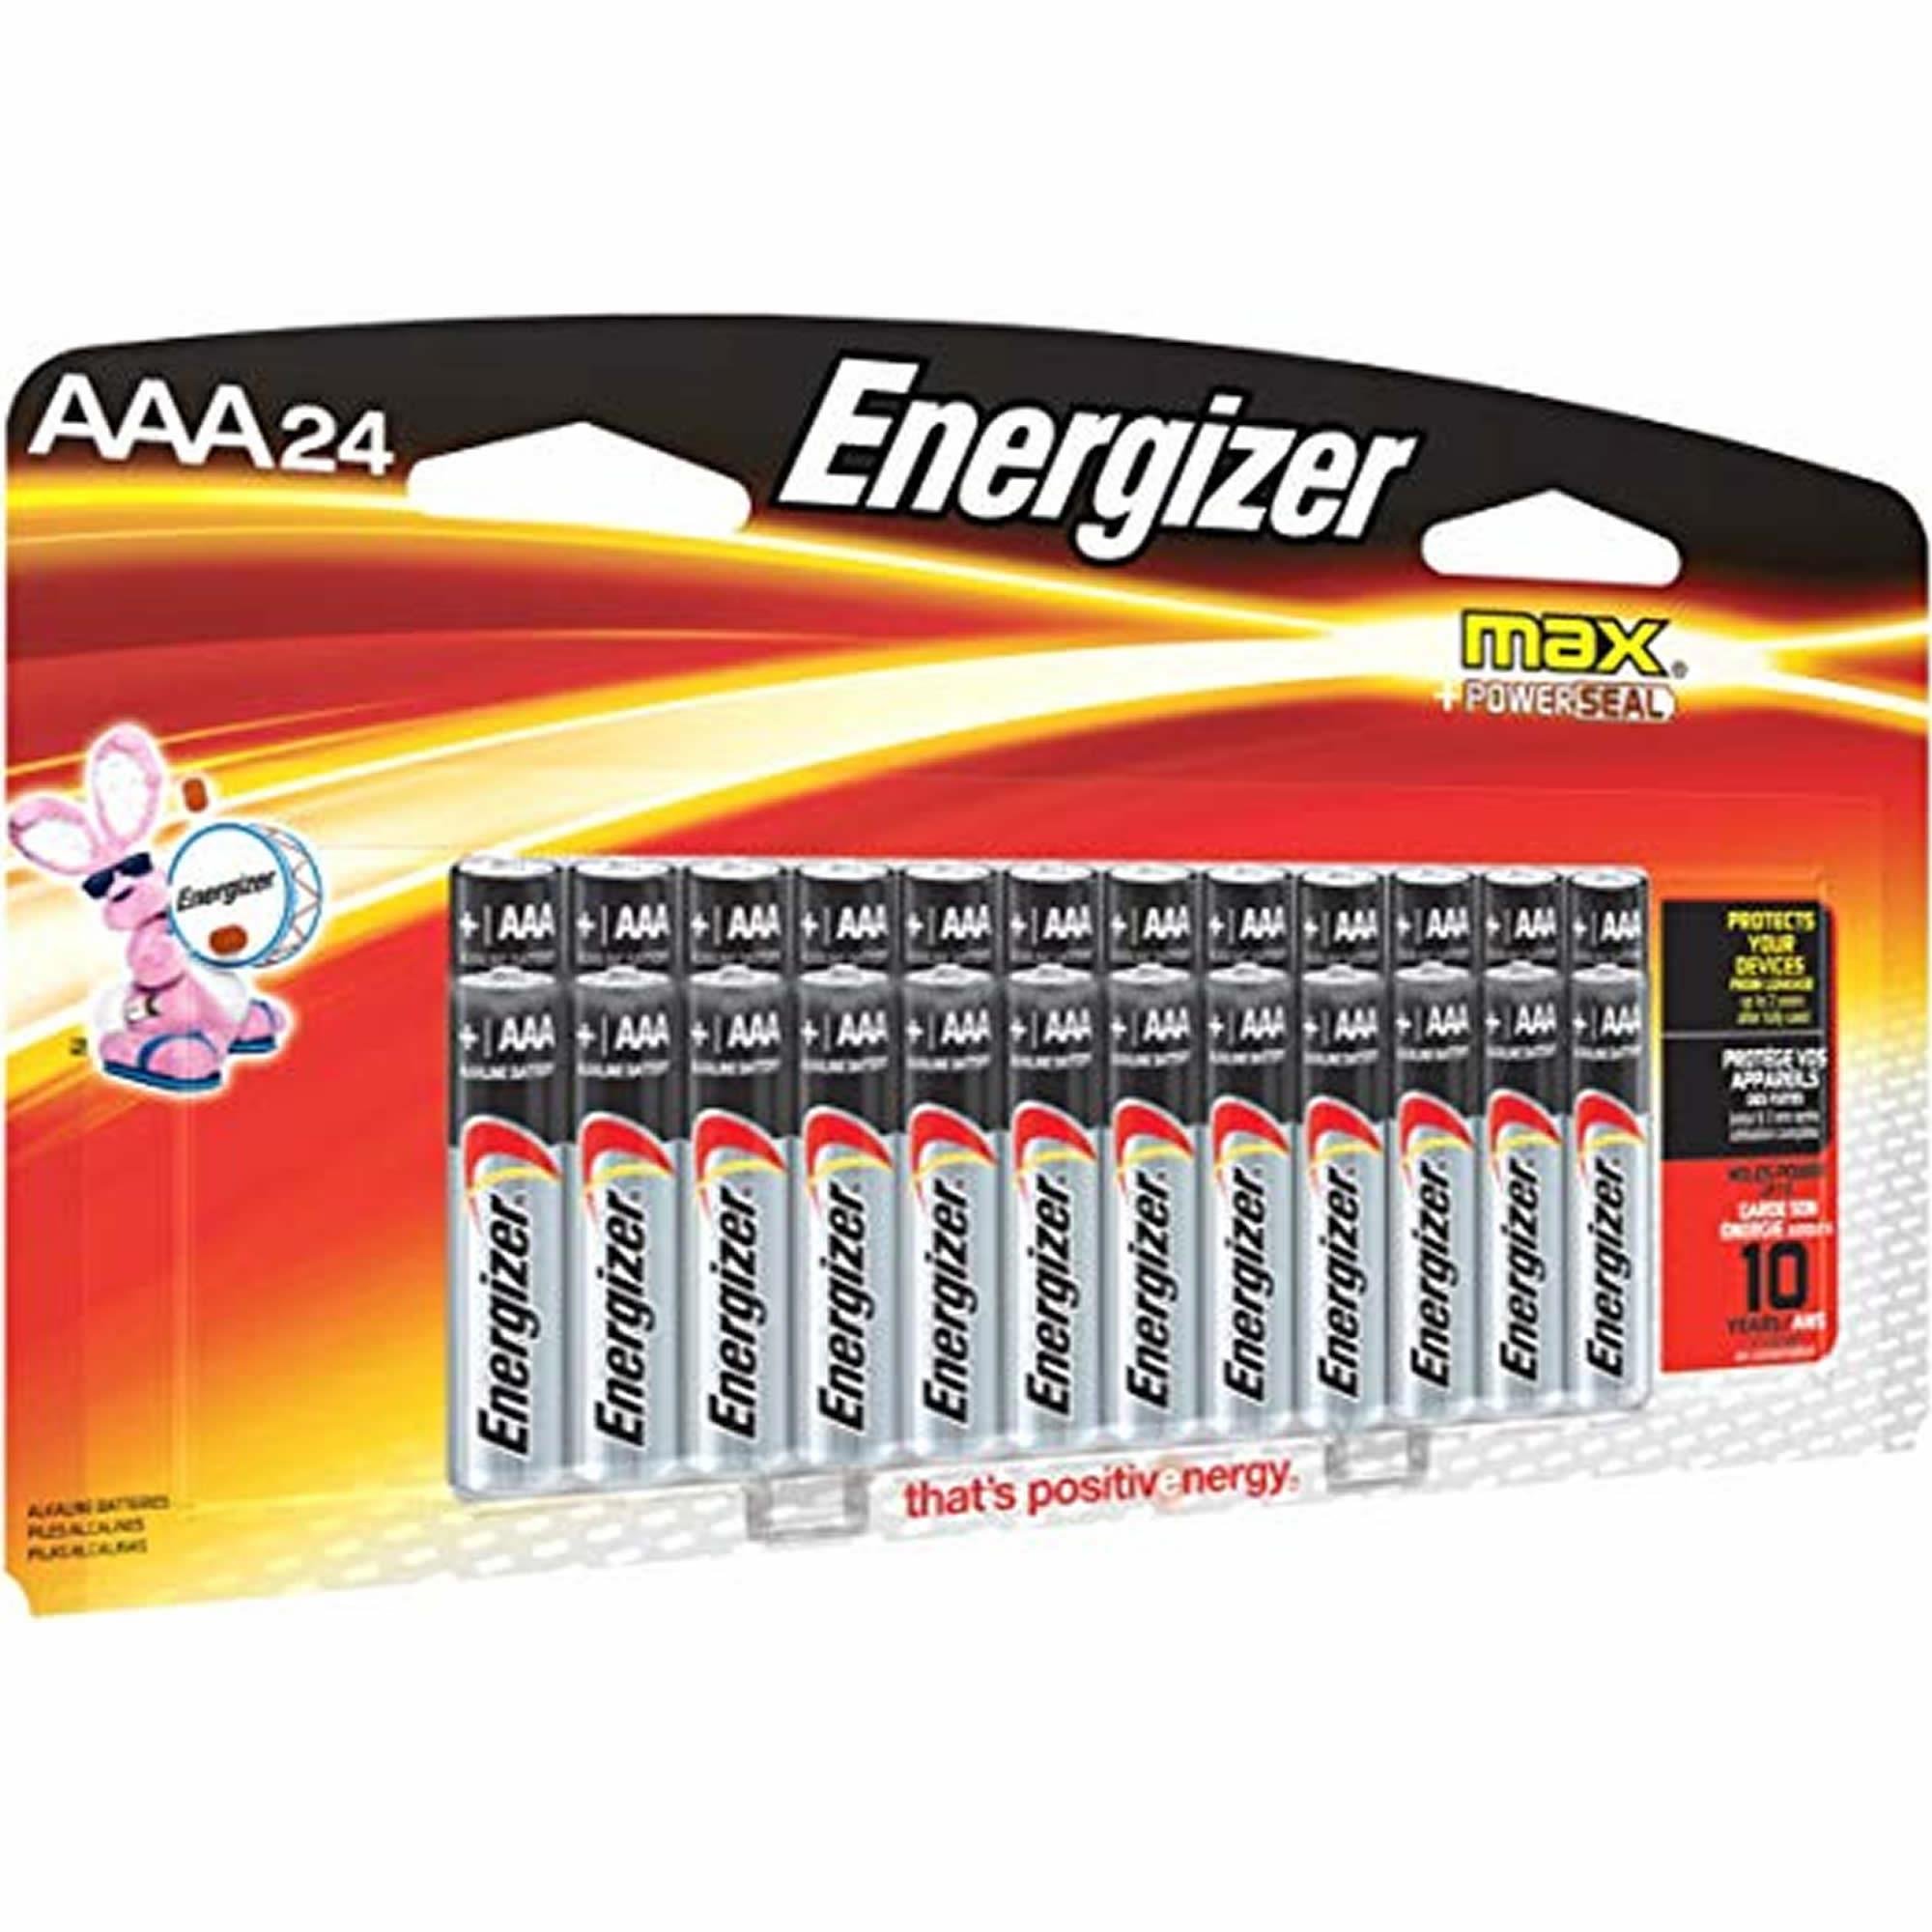 AAA Alkaline Batteries, 24 Pack